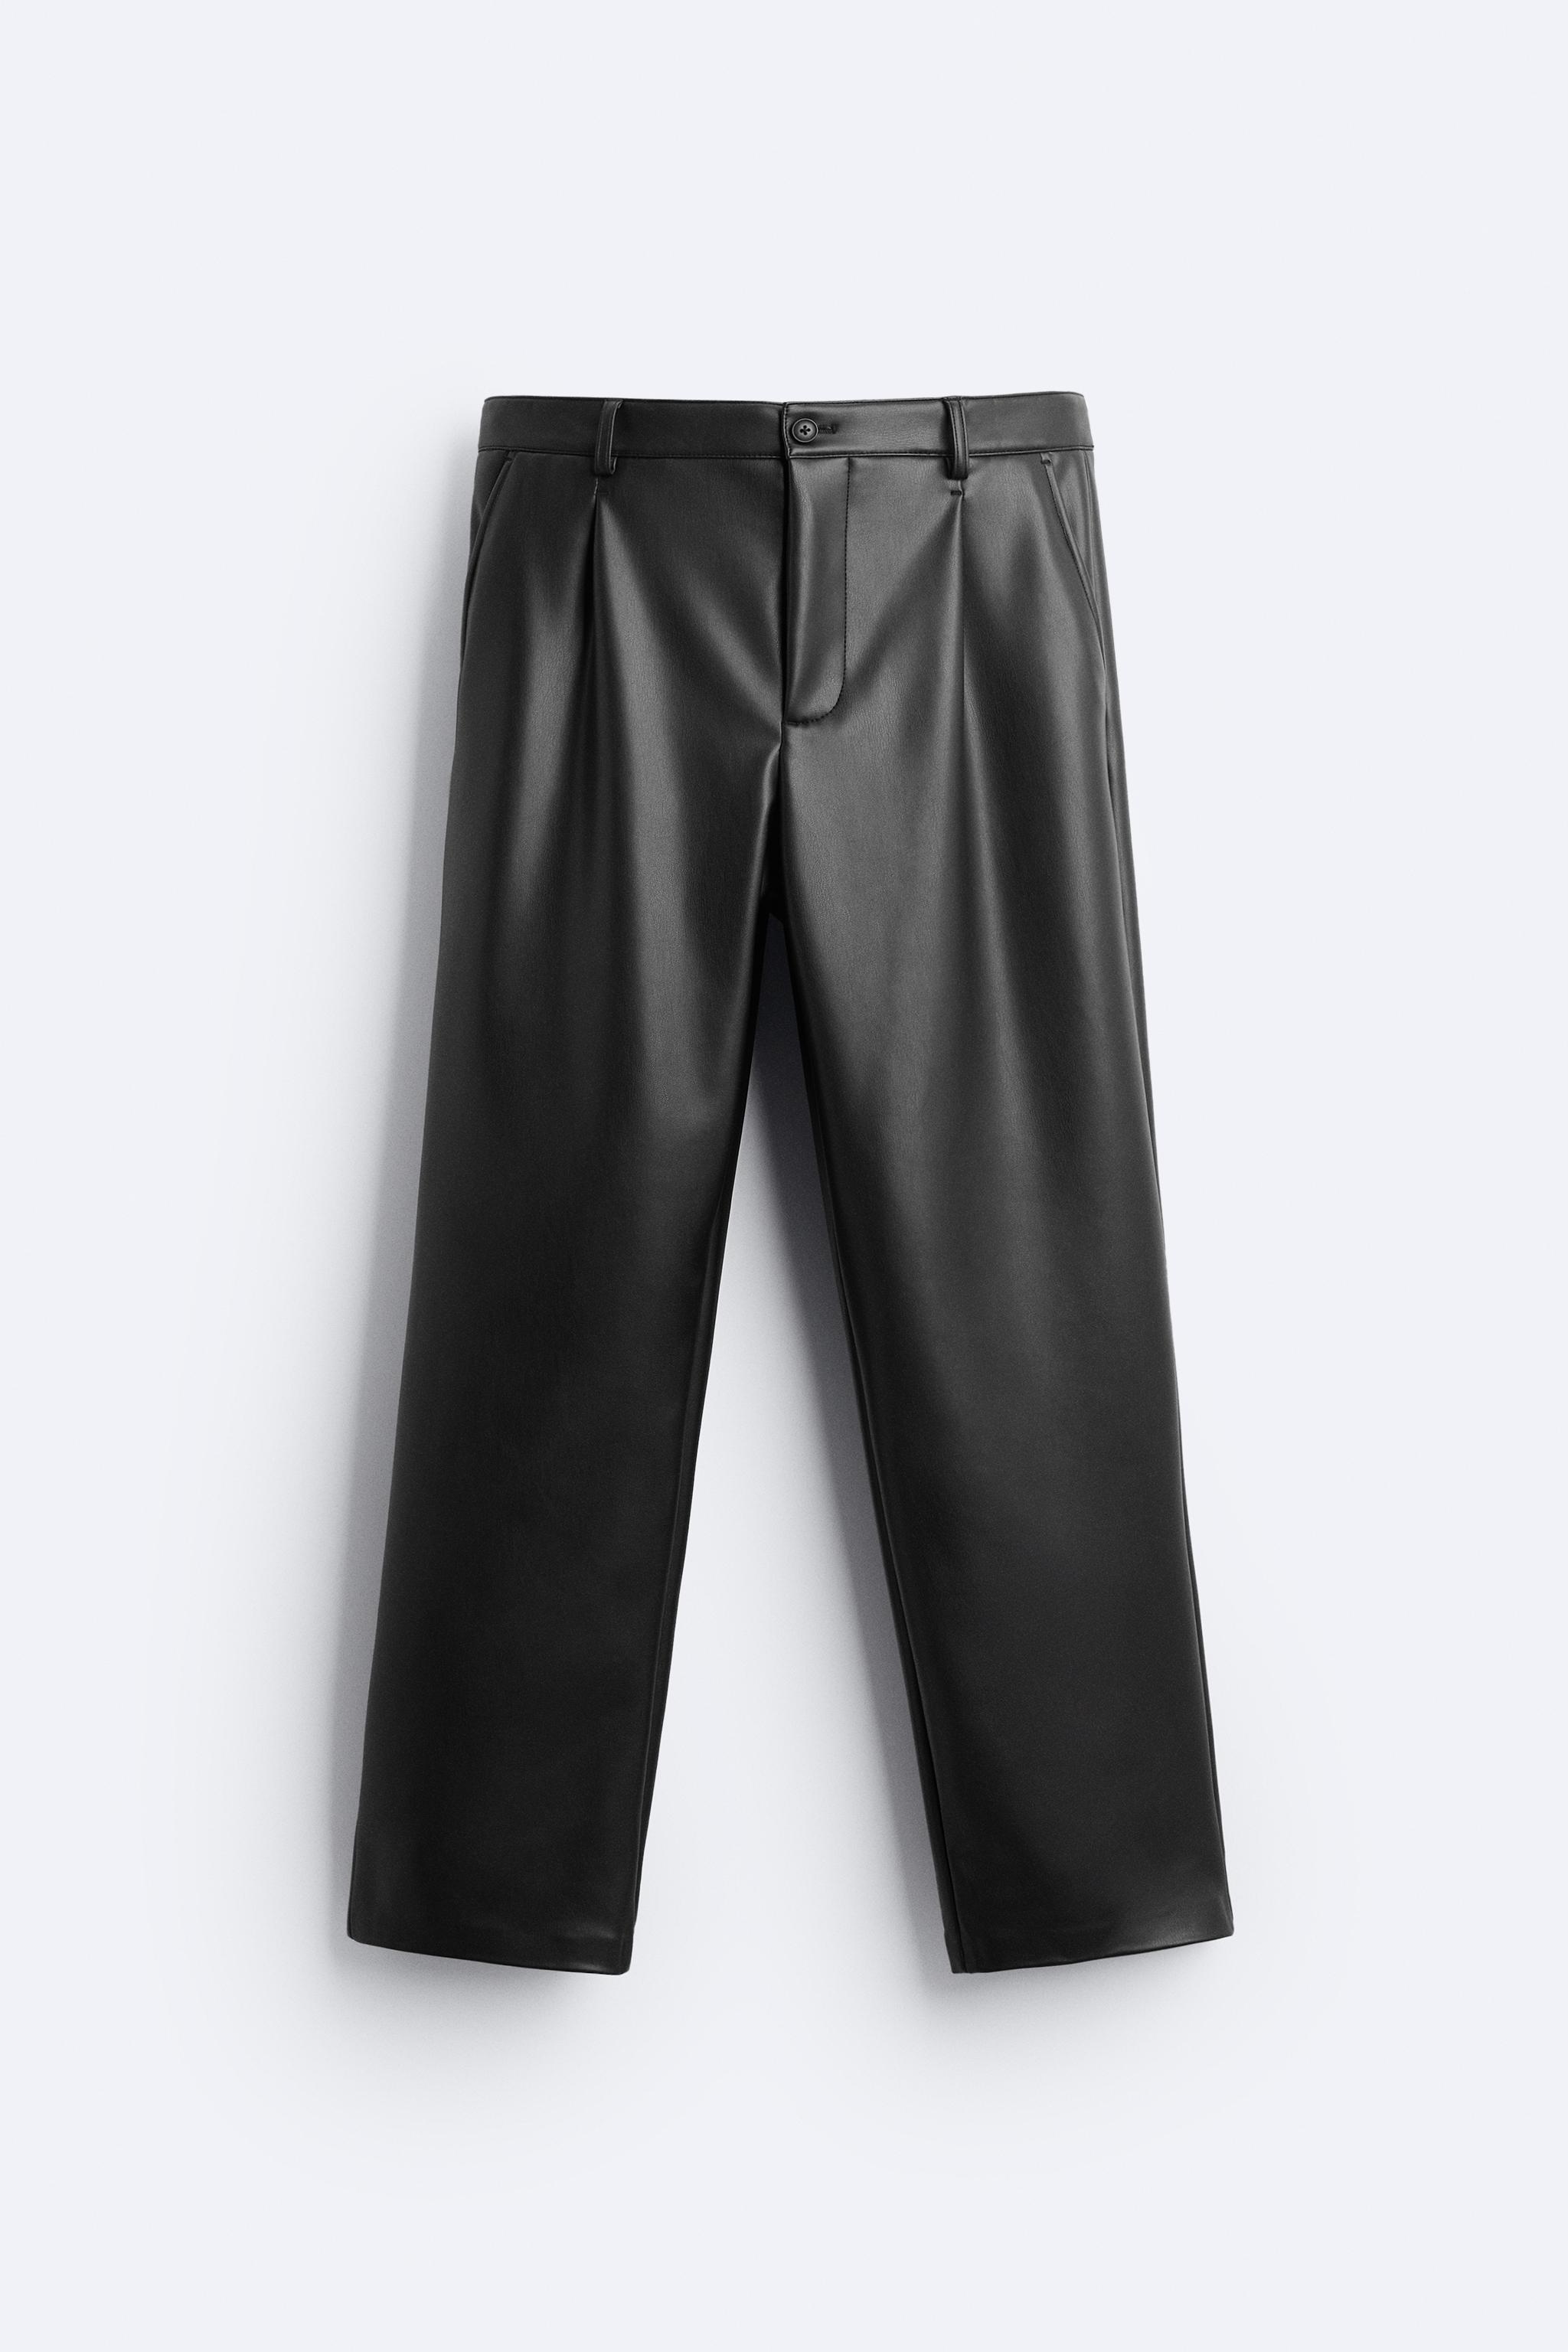 Zara Extra Long Faux Leather Leggings Pants size S Bloggers Favorite Zipper  Slit